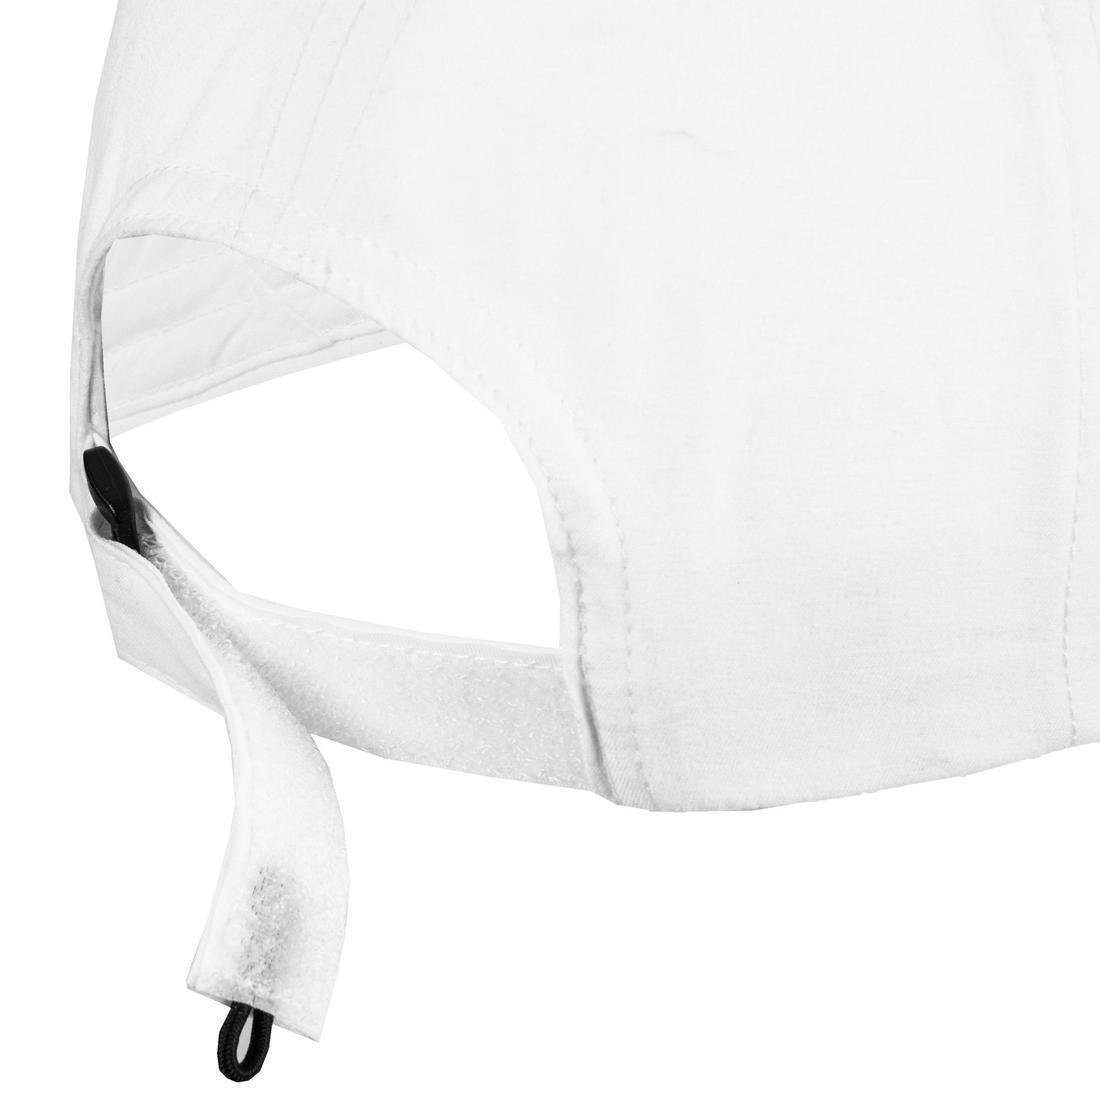 ARTENGO - Adult Flexible Tennis Cap TC 100 S58-White